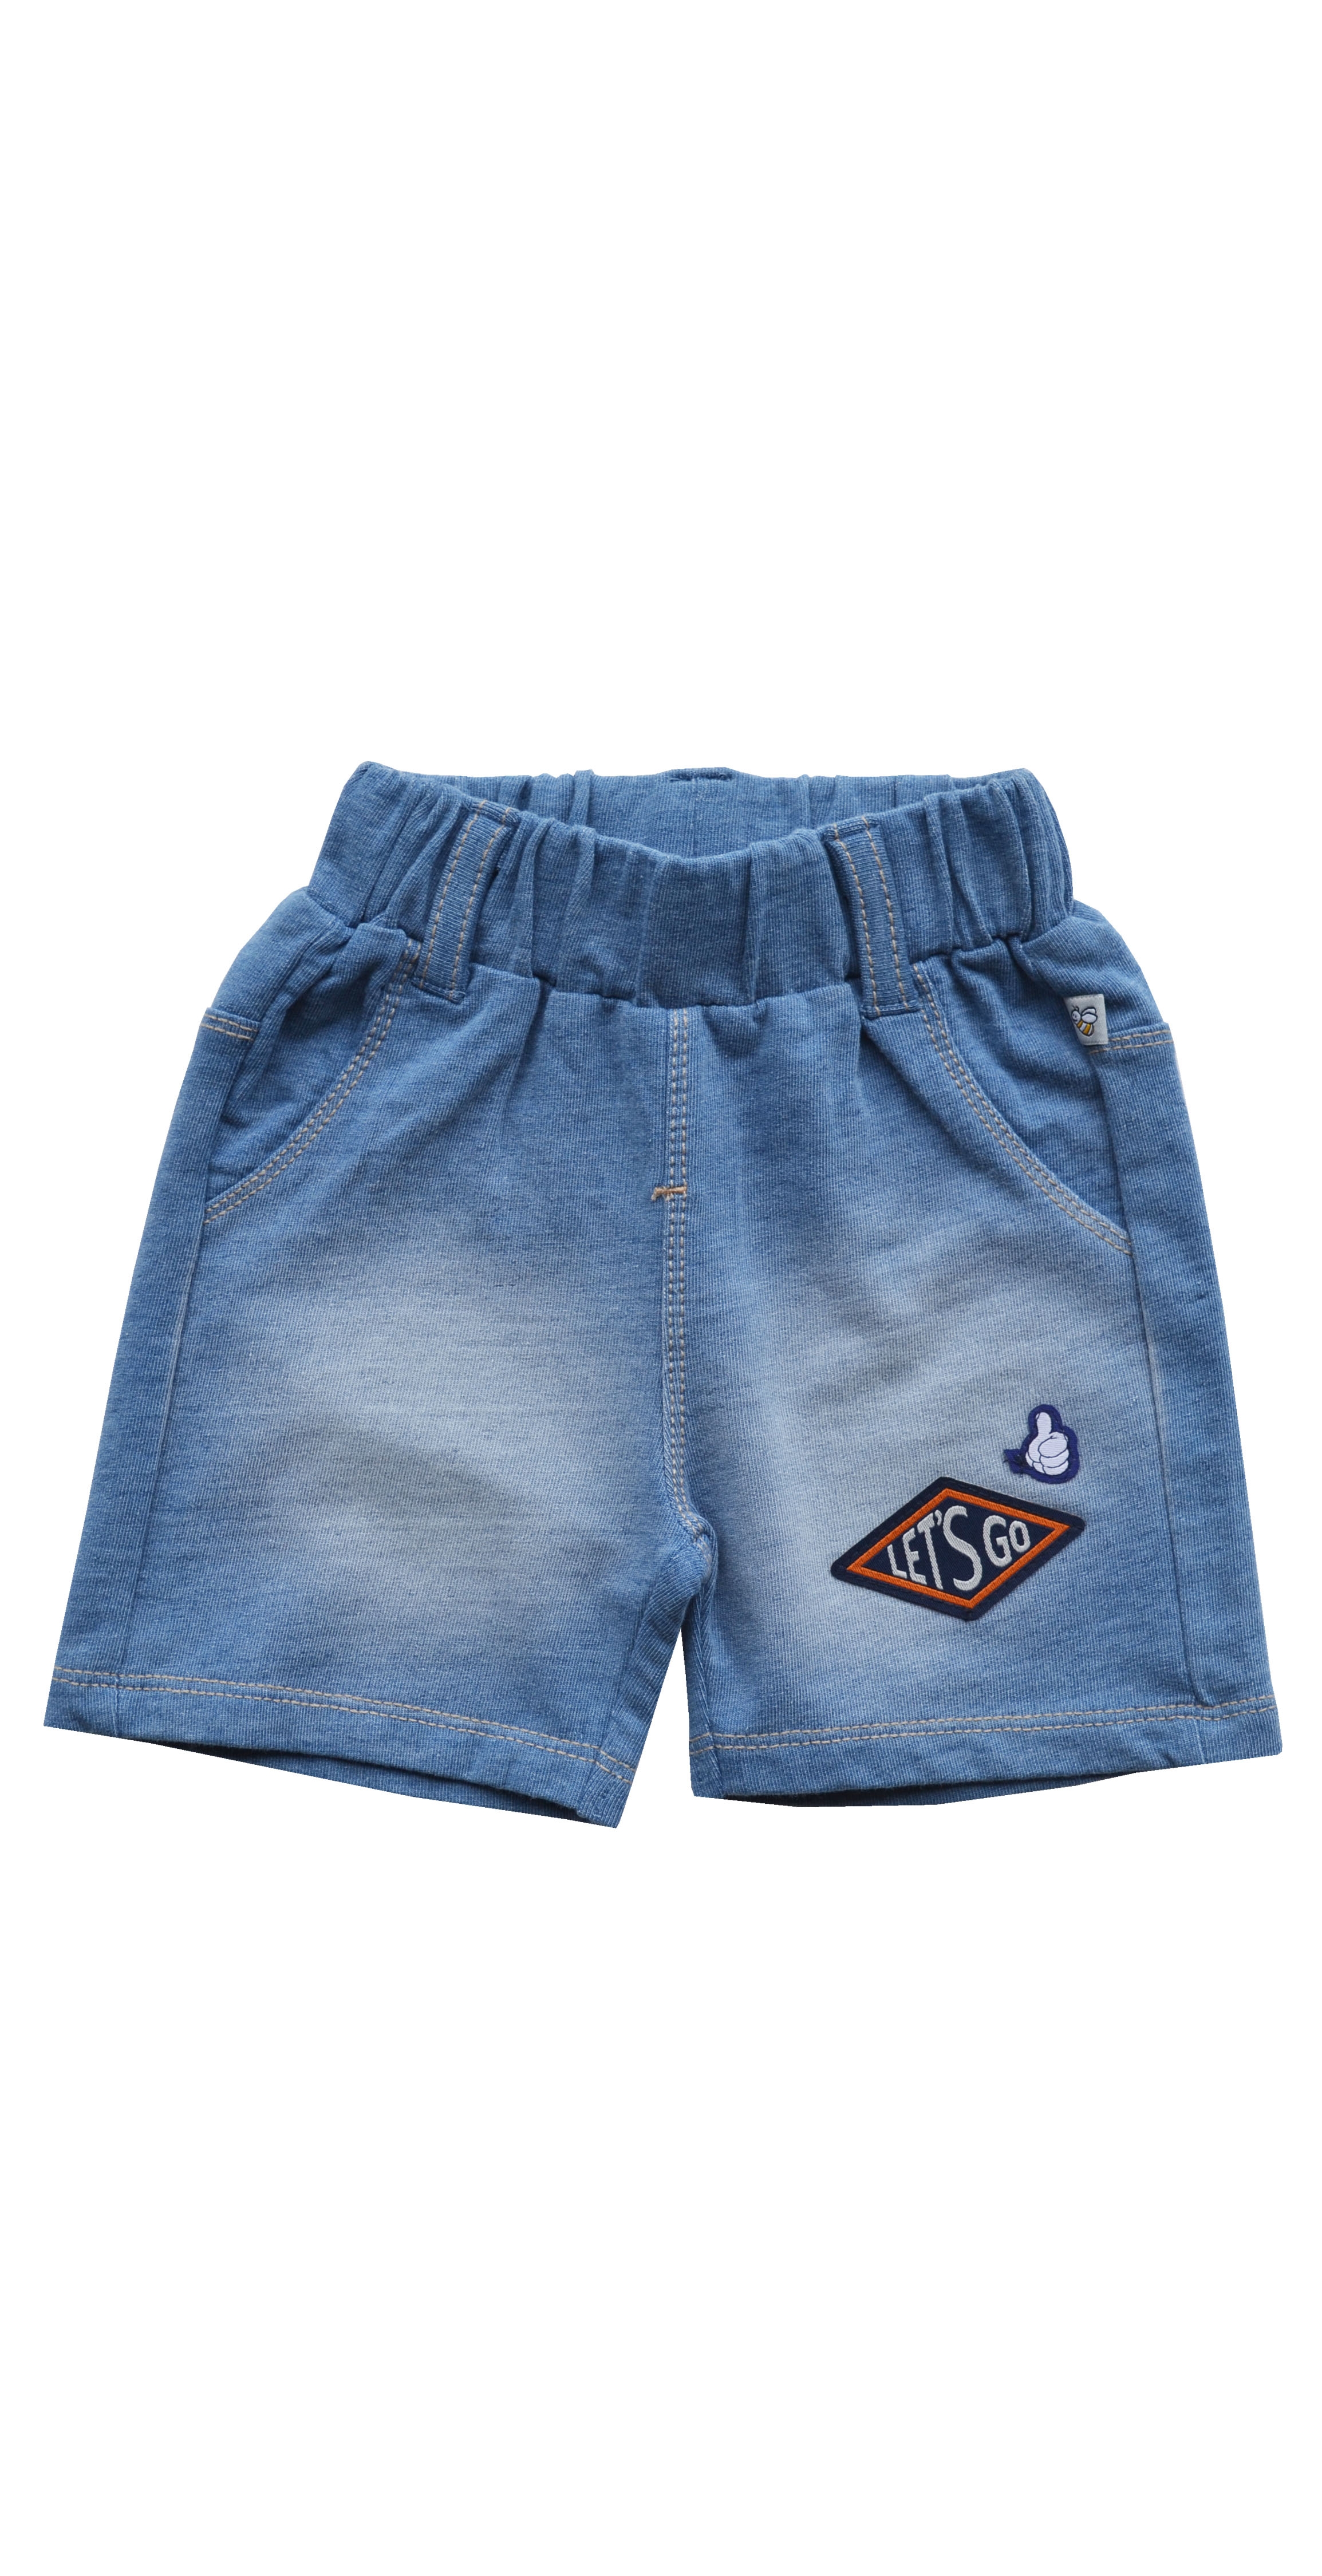 Babeez | Boys Denim Shorts with Lets Go Applique(95% Cotton 5% Elasthan Denim Fleece) undefined